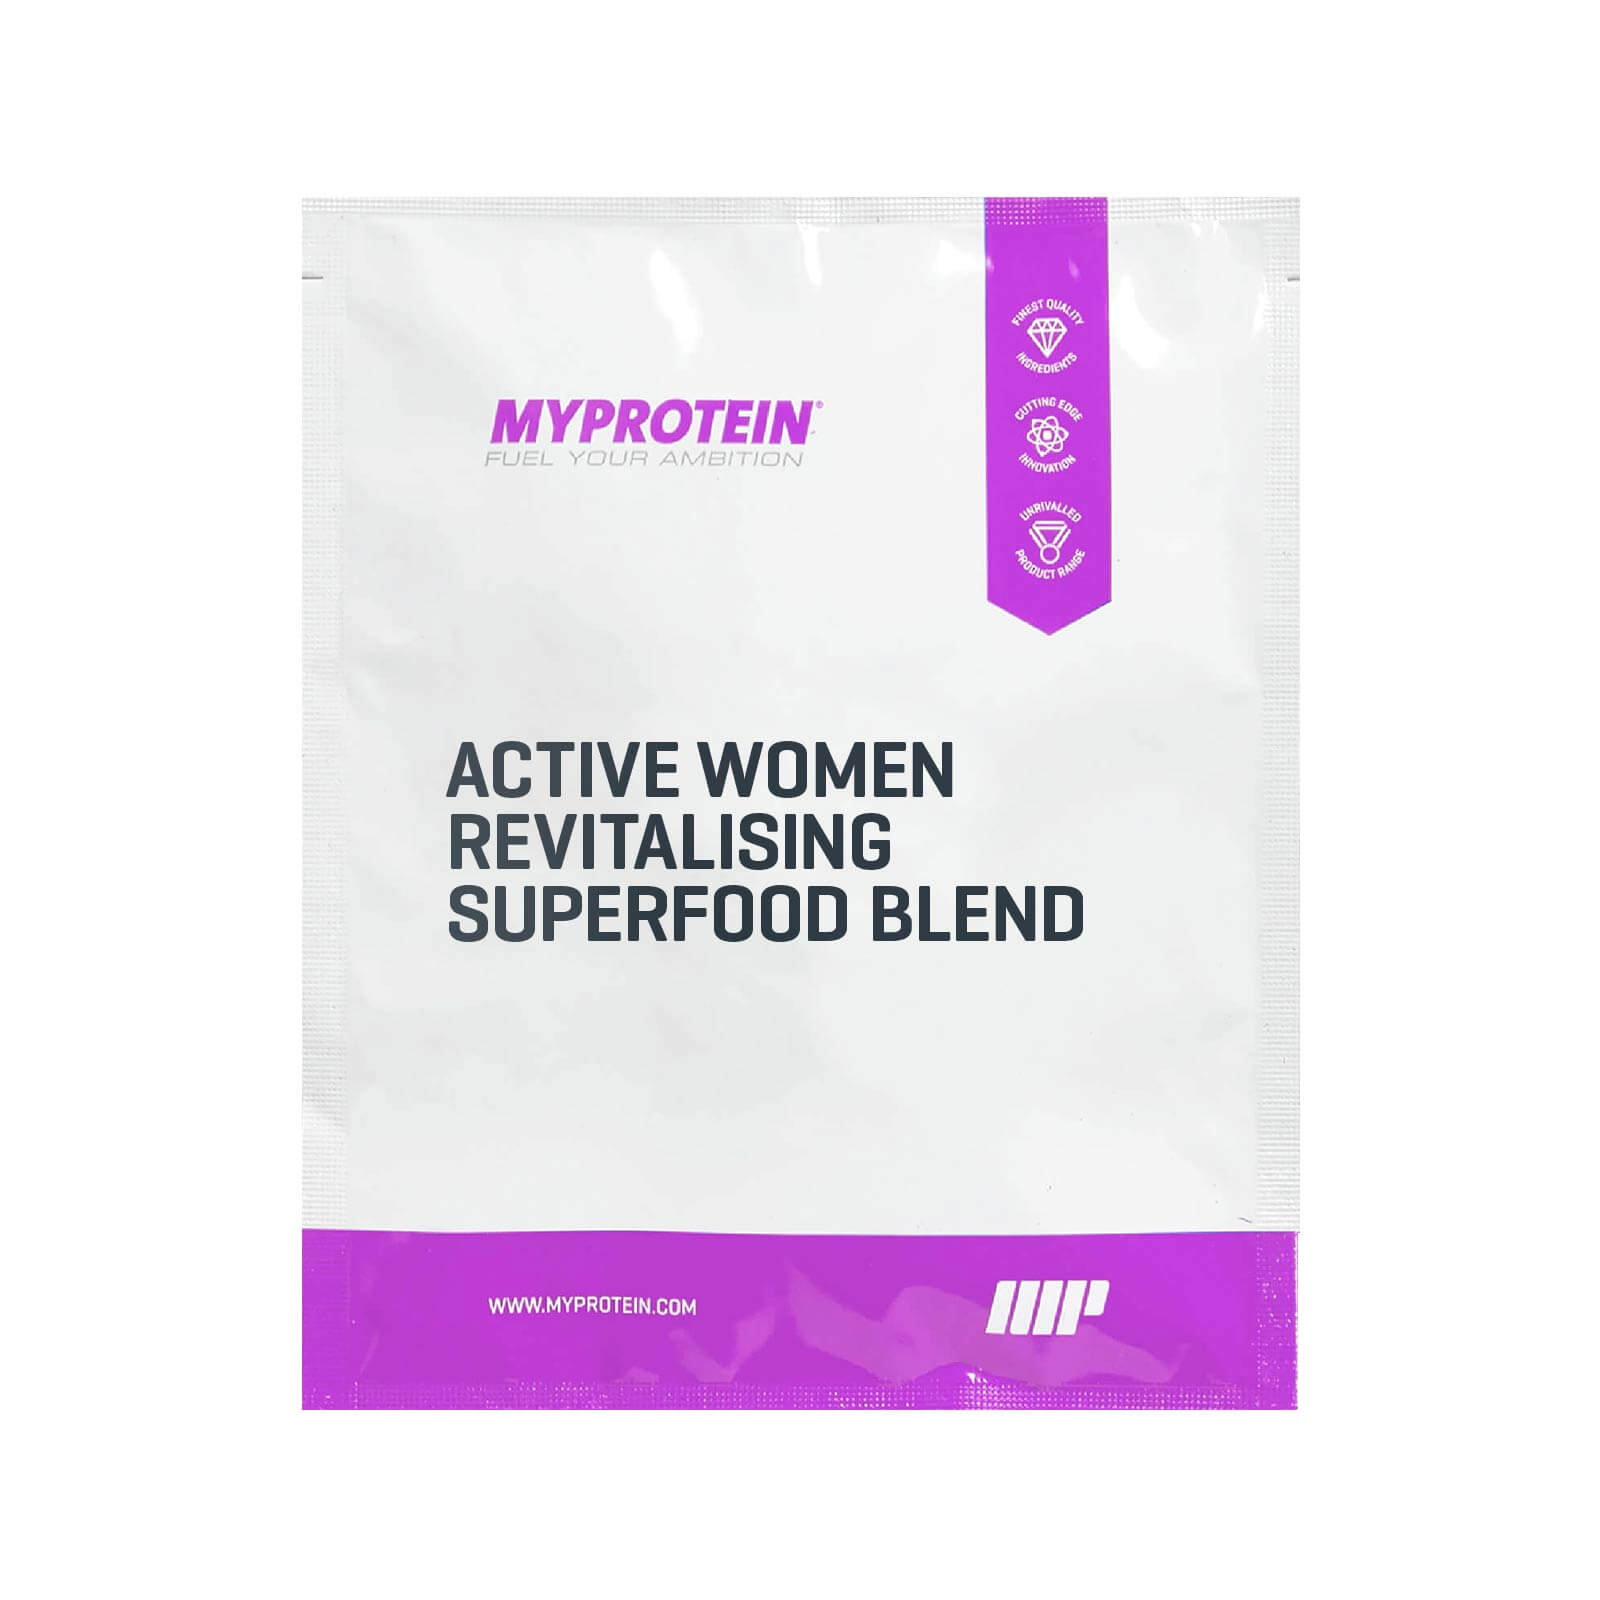 Myprotein Active Women Revitalising Superfood Blend, 25g (Sample)